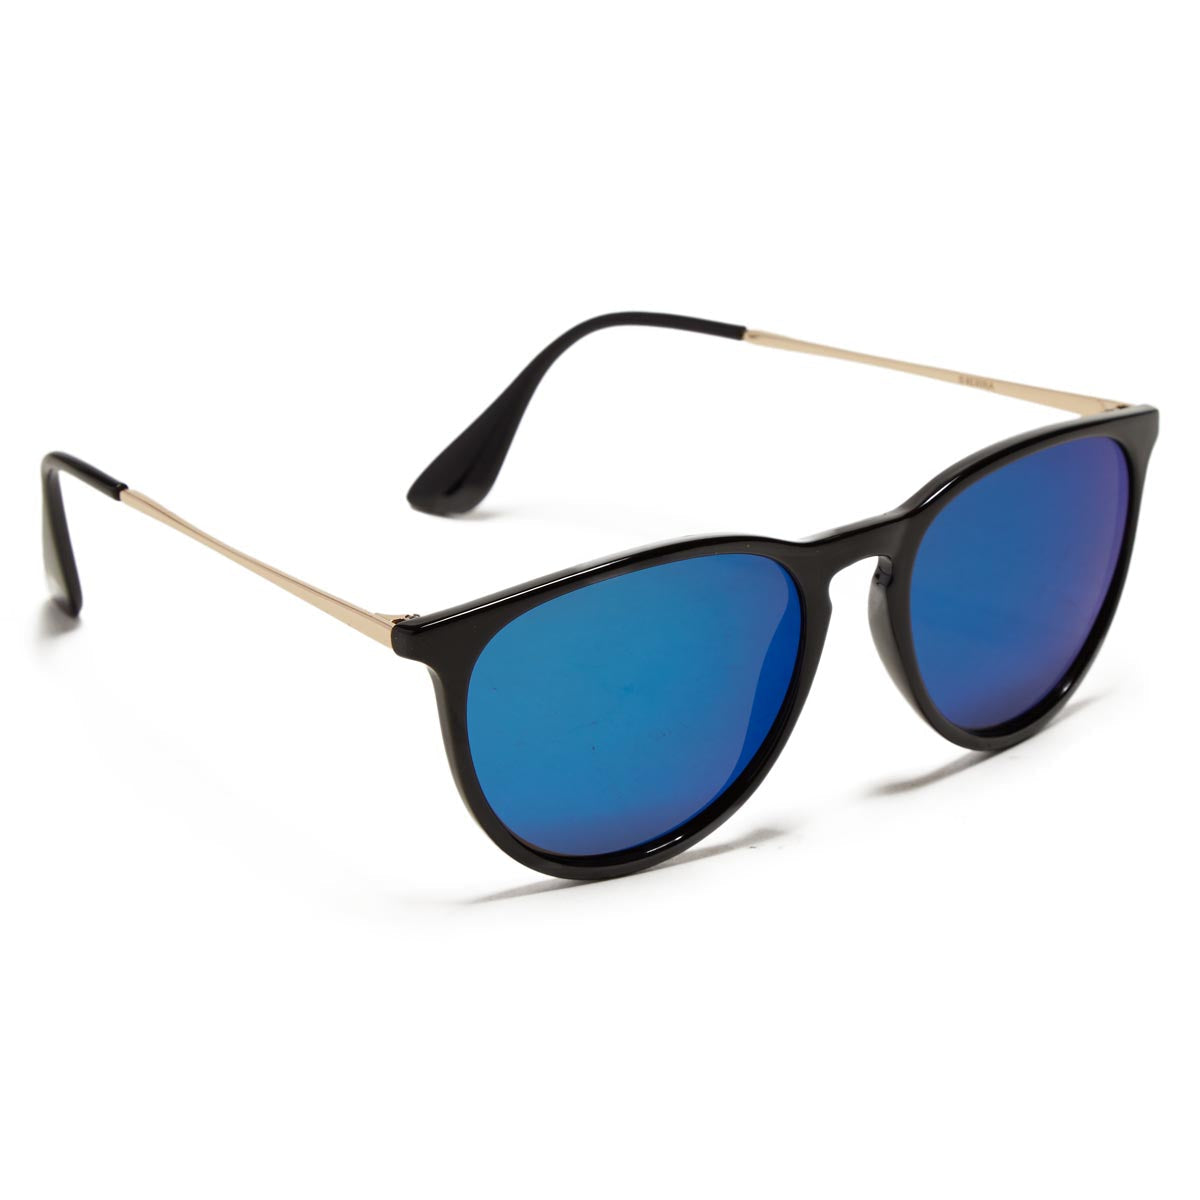 Glassy Sierra Polarized Sunglasses - Black/Gold/Blue Mirror image 1